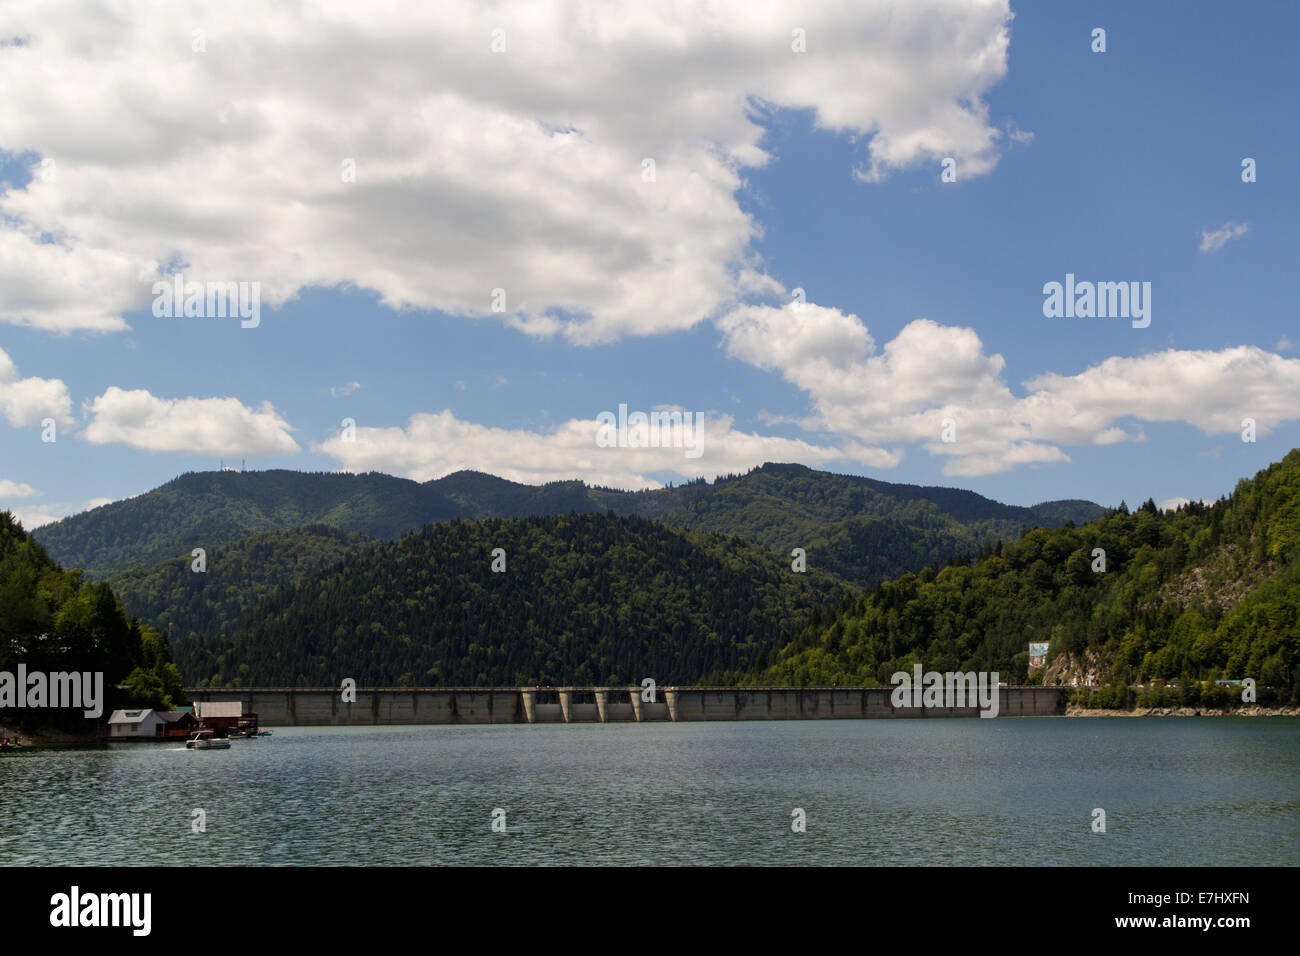 Schönen bewölkten Himmel über dem See. Standort: Bicaz-See, Rumänien. Stockfoto